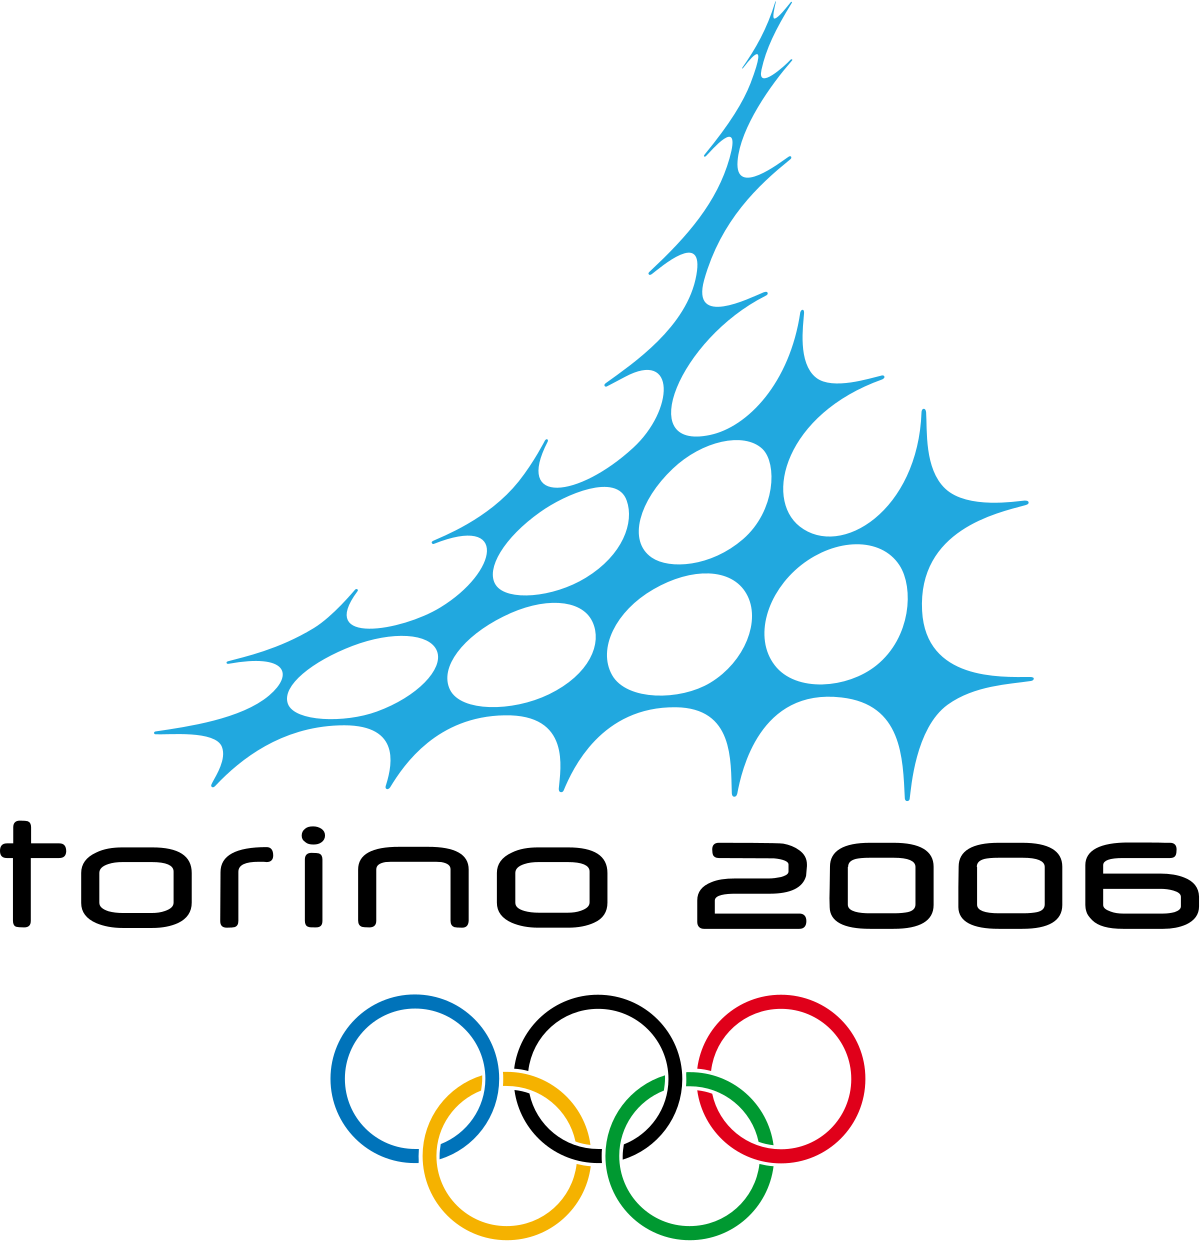 2006 Winter Olympics - Wikipedia